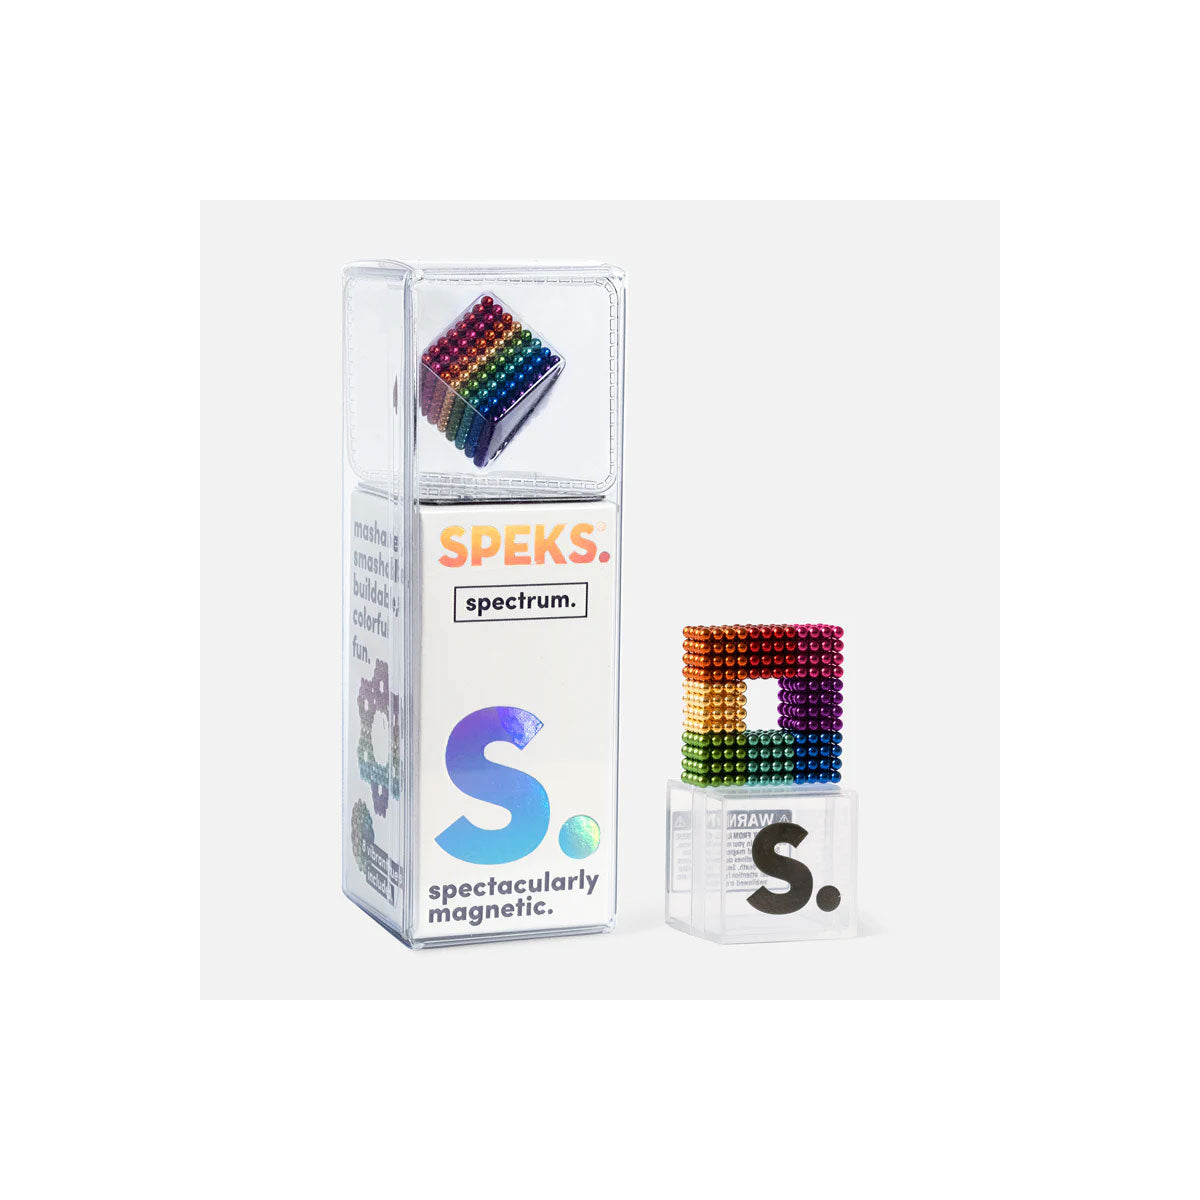 Spectrum Speks 512 2.5mm Magnet Balls